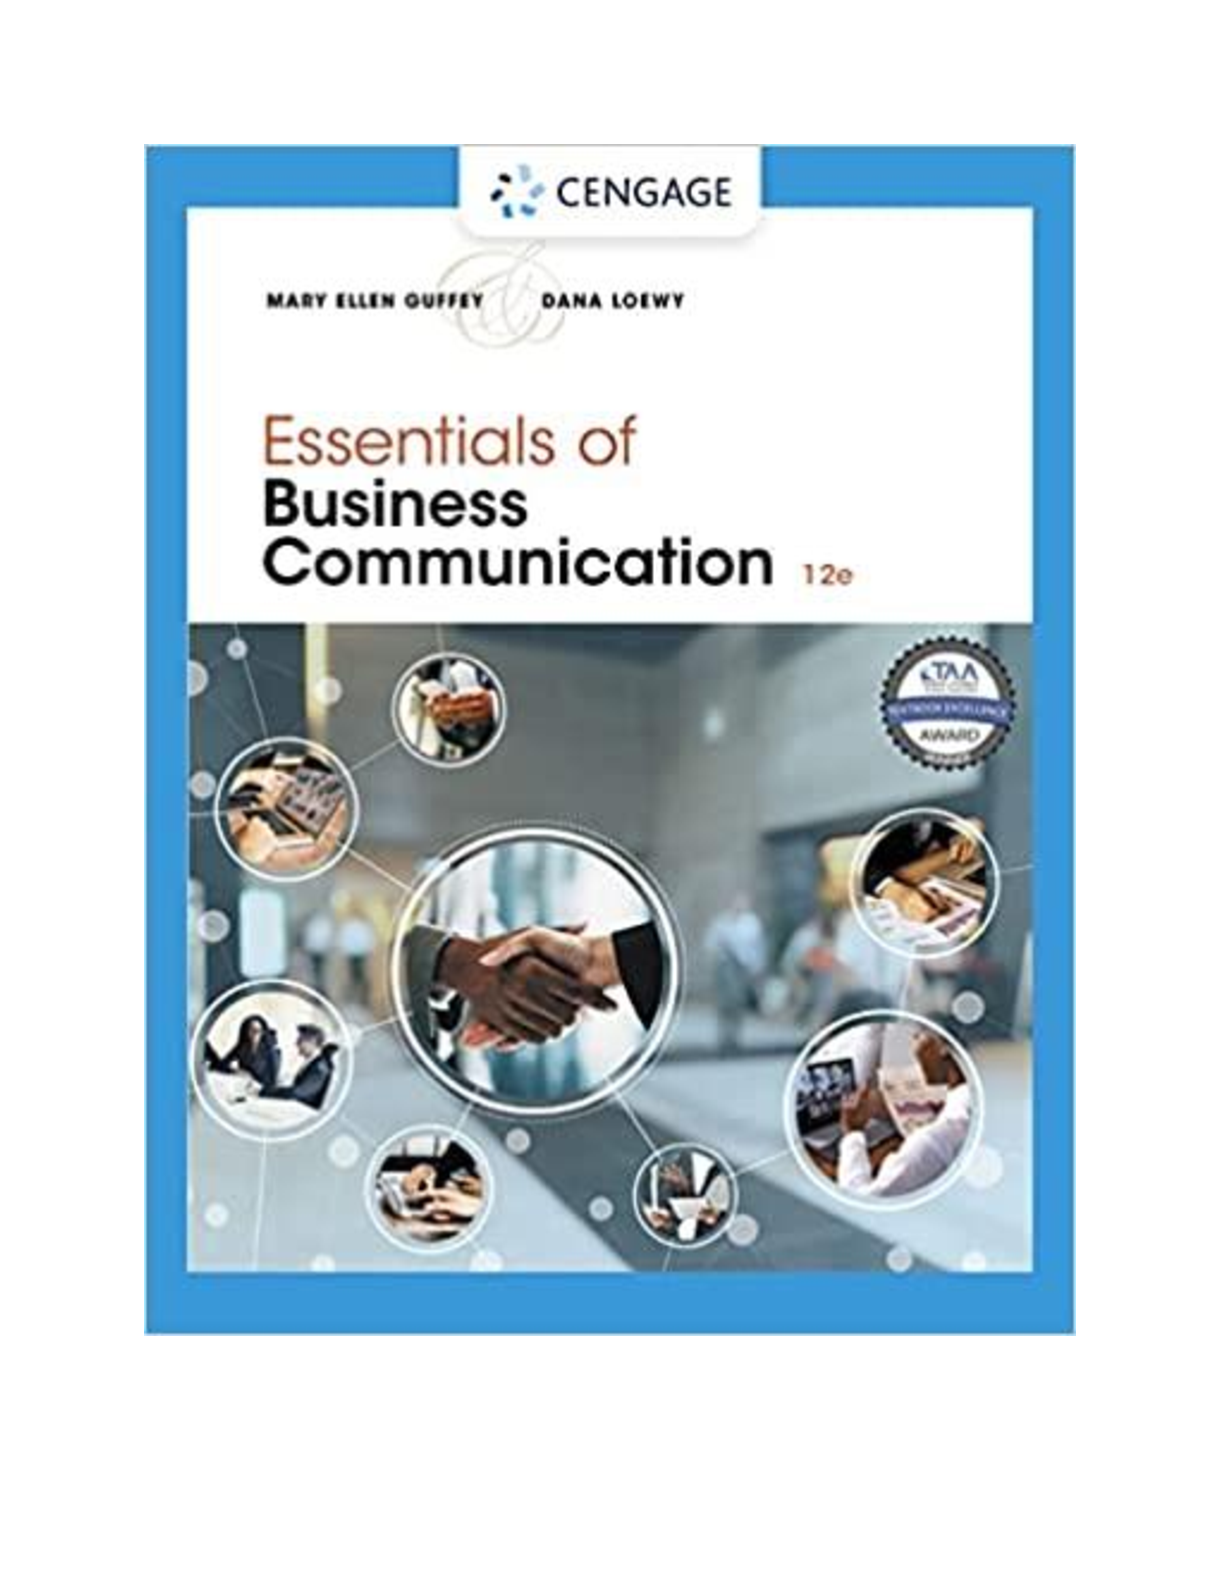 ebook-pdf-essentials-of-business-communication-12e-mary-ellen-guffey-dana-loewy